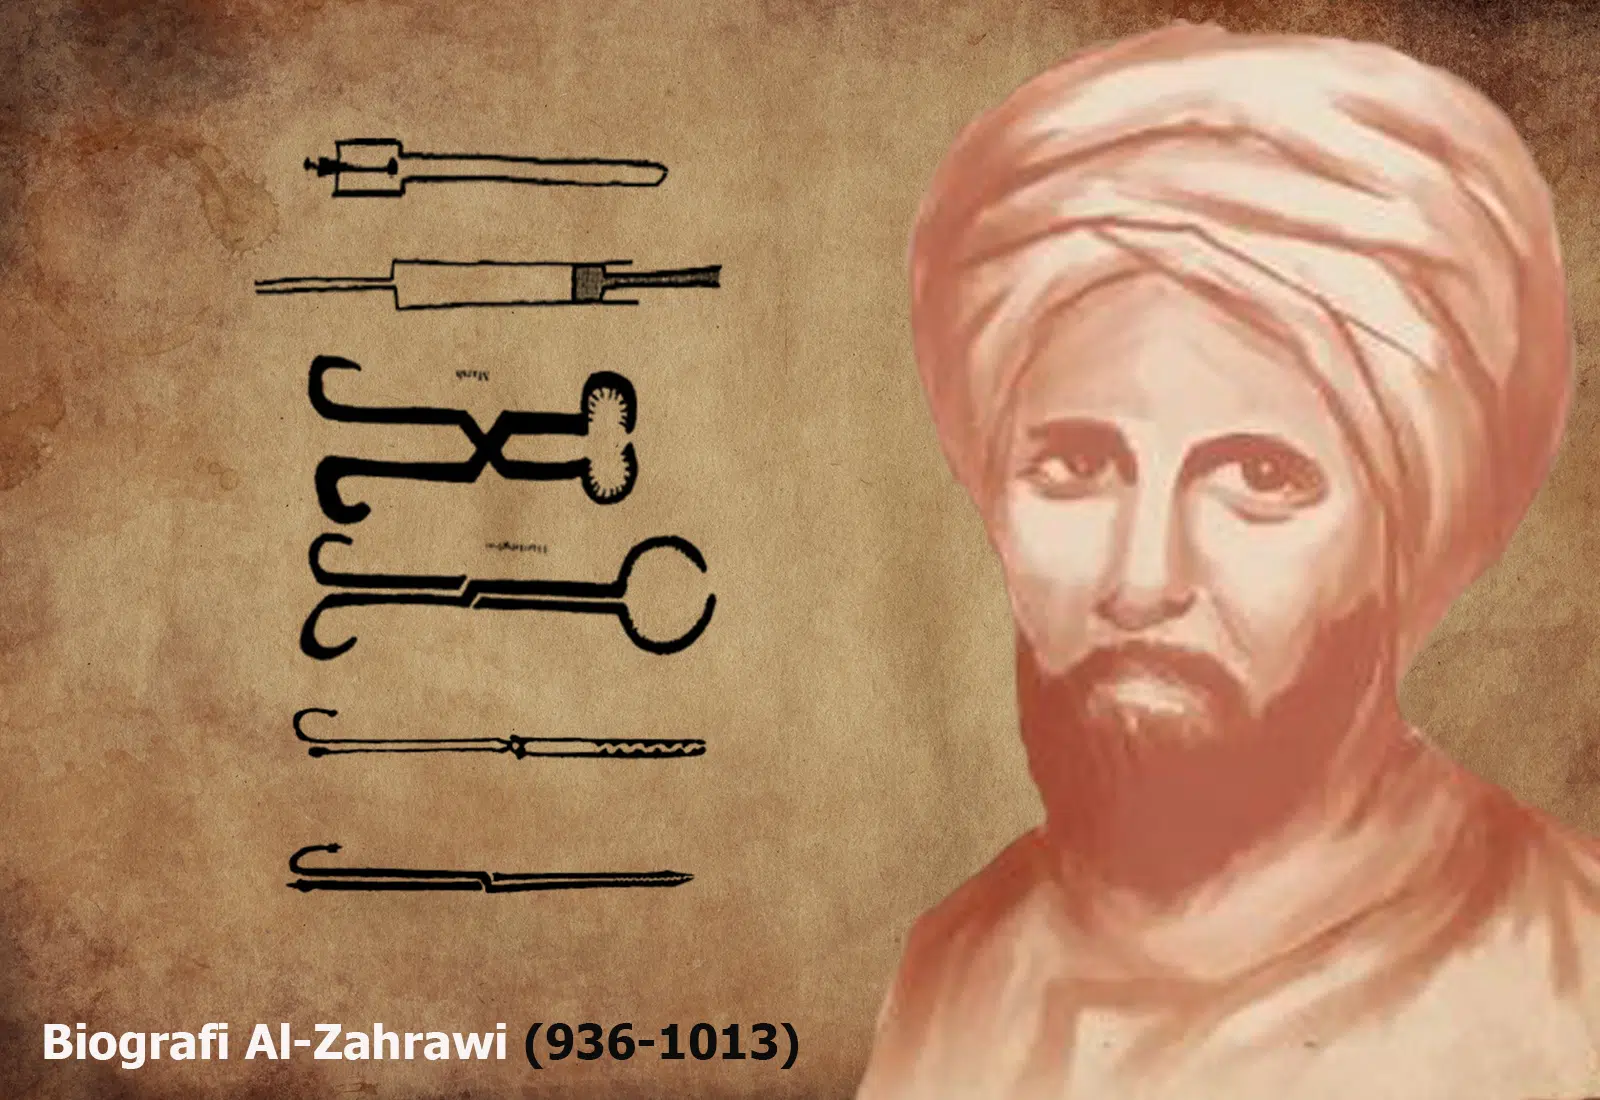 biografi-al-zahrawi-936-1013-dalam-dunia-kedokteran-khusunya-ilmu-bedah